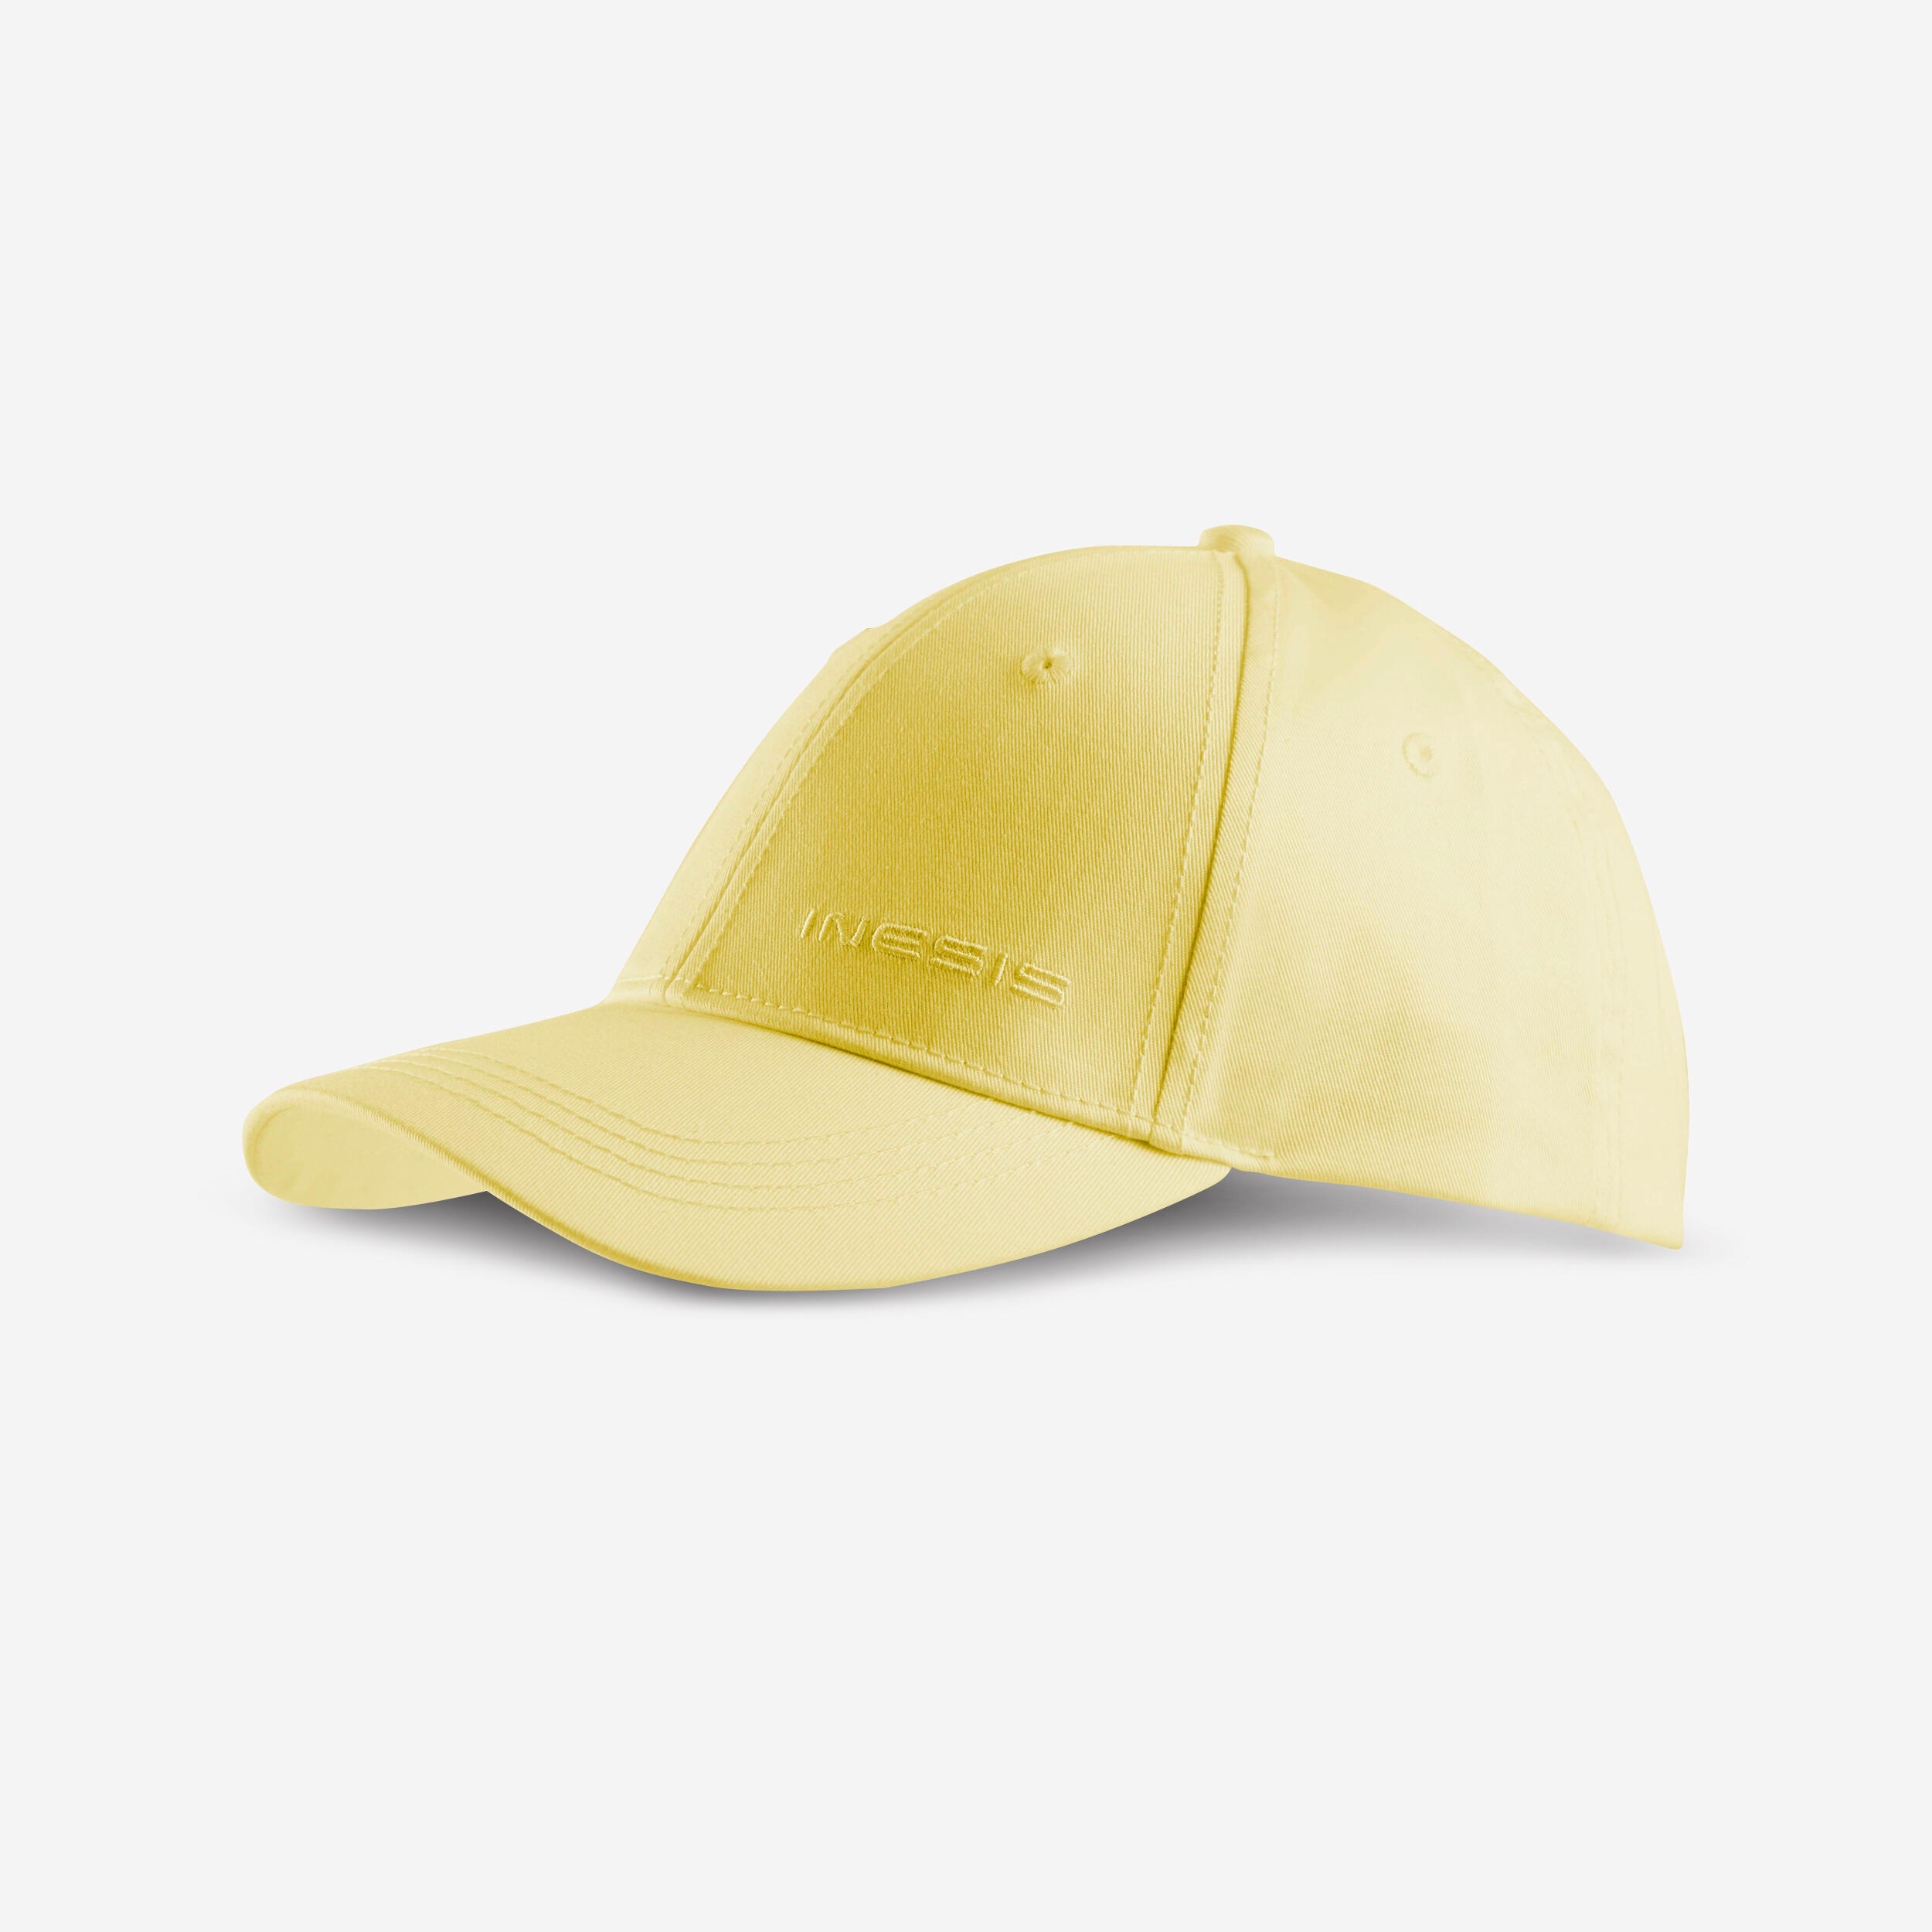 Adult's golf cap - MW 500 yellow 1/3